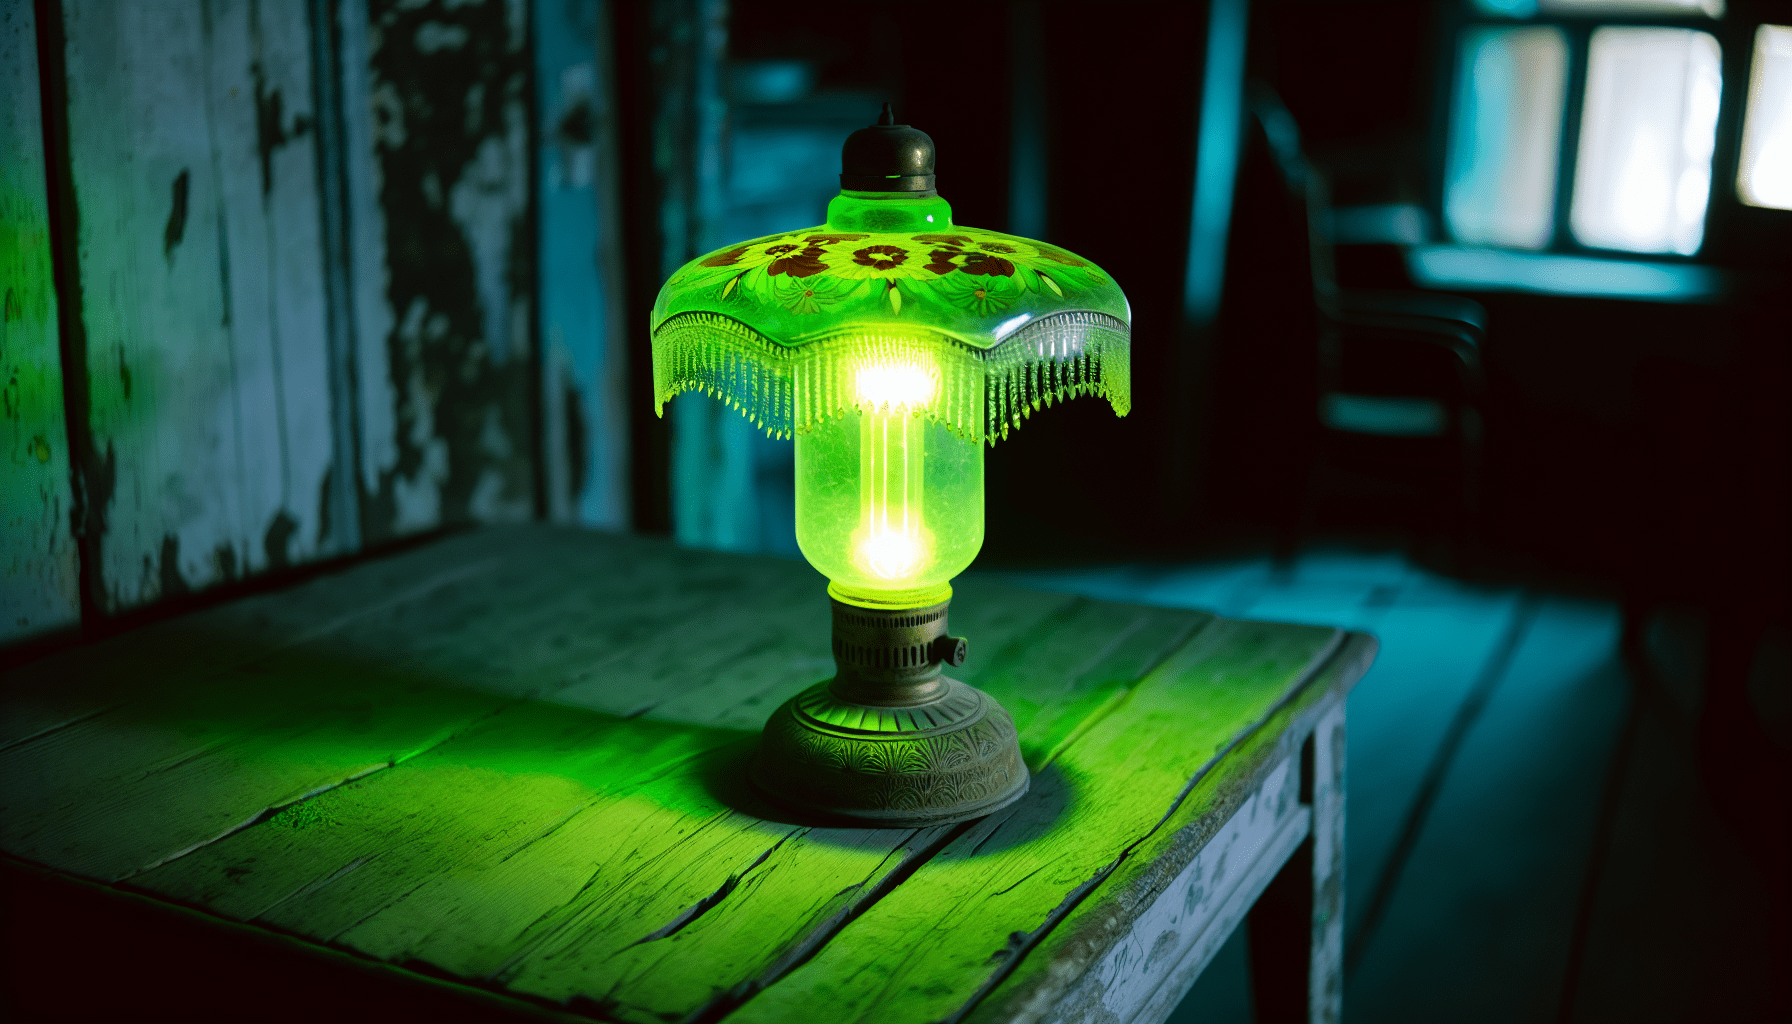 A vintage uranium glass lamp glowing under UV light